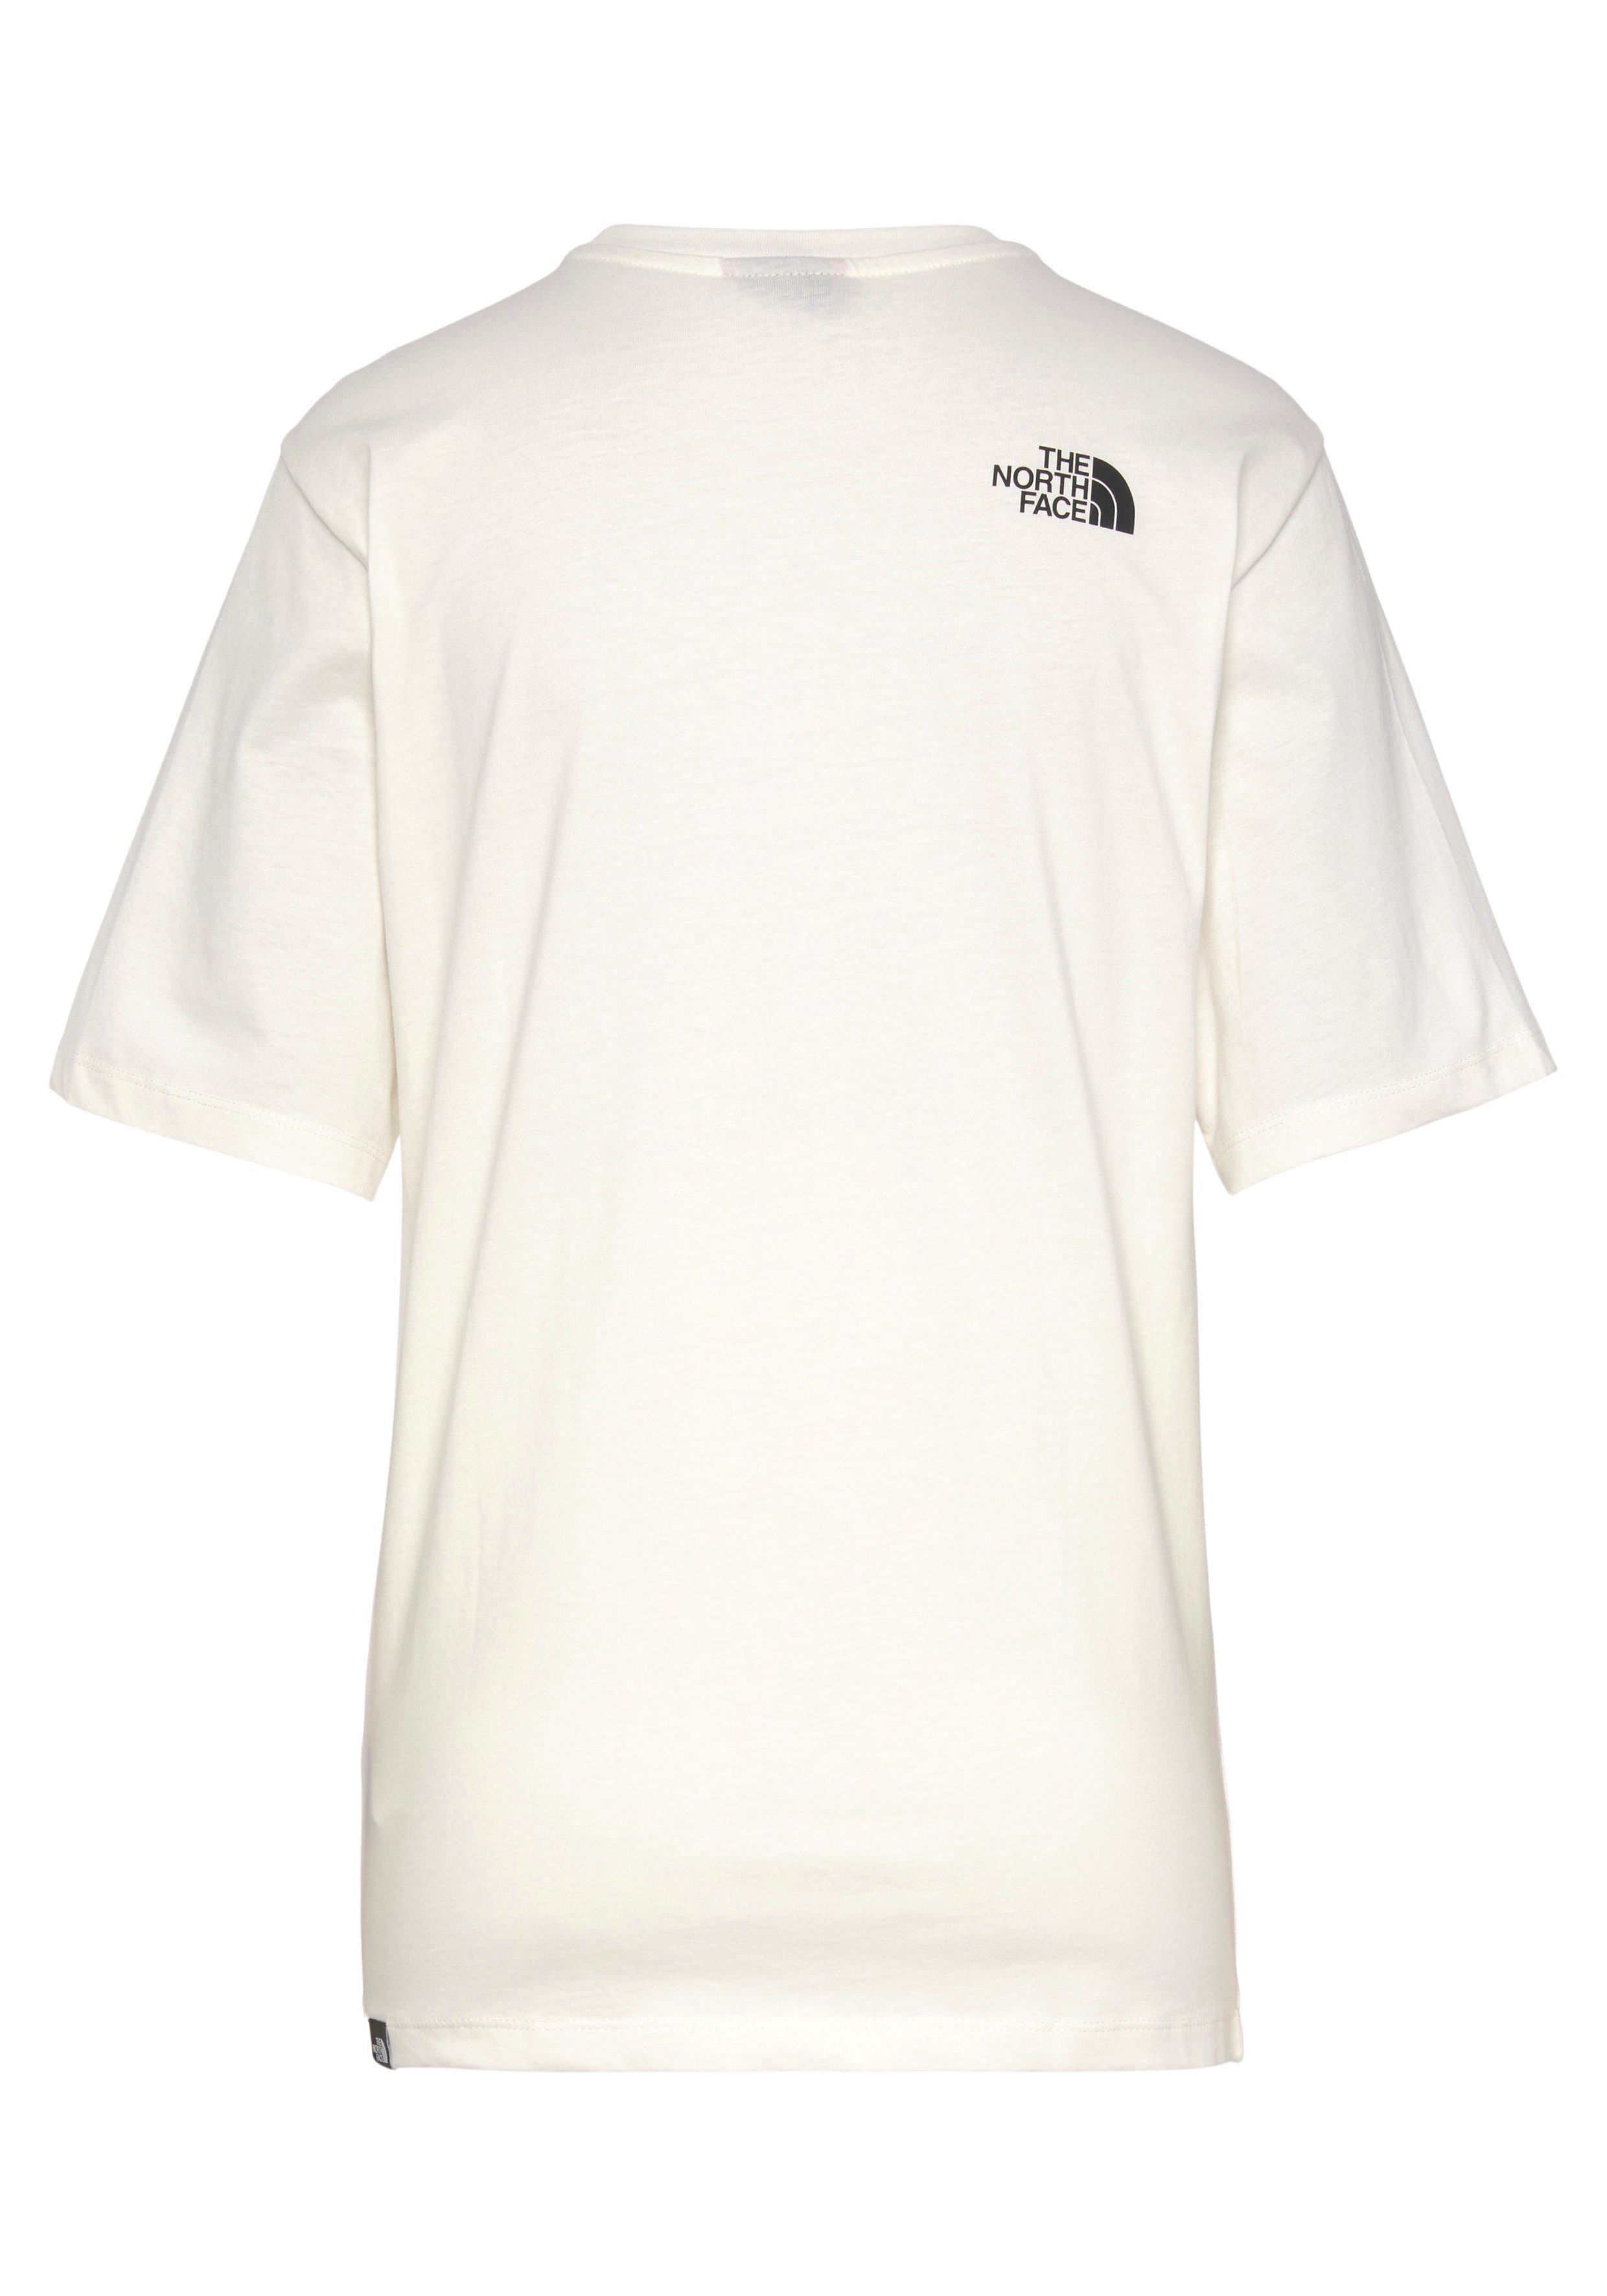 T-Shirt white mit The Logodruck EASY W auf RELAXED TEE der North Face Brust